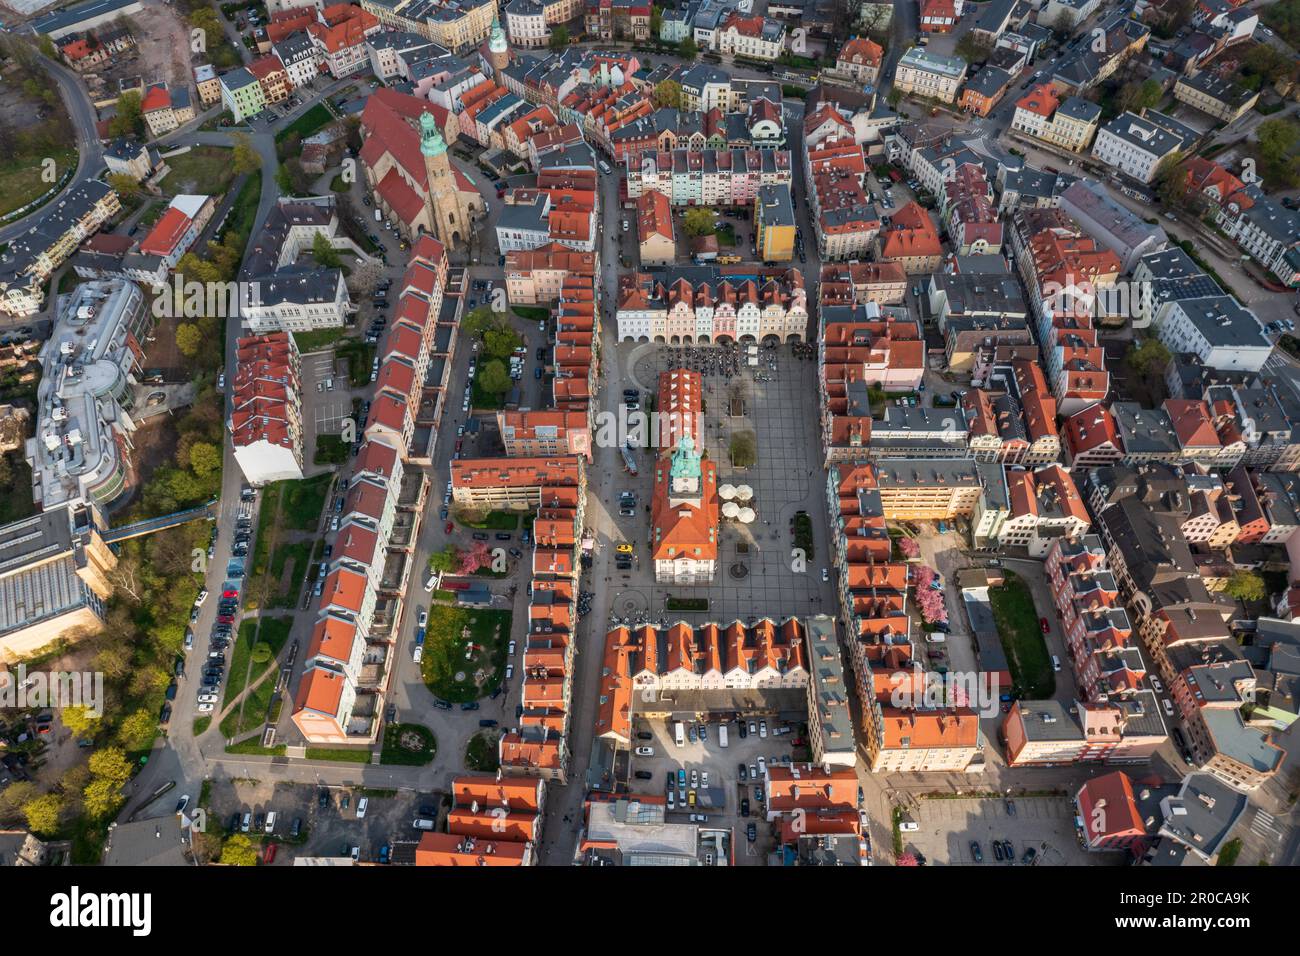 Jelenia Góra, Lower Sielesia, Poland: Aerial photo captures the vibrant market square of Jelenia Góra city. Stock Photo